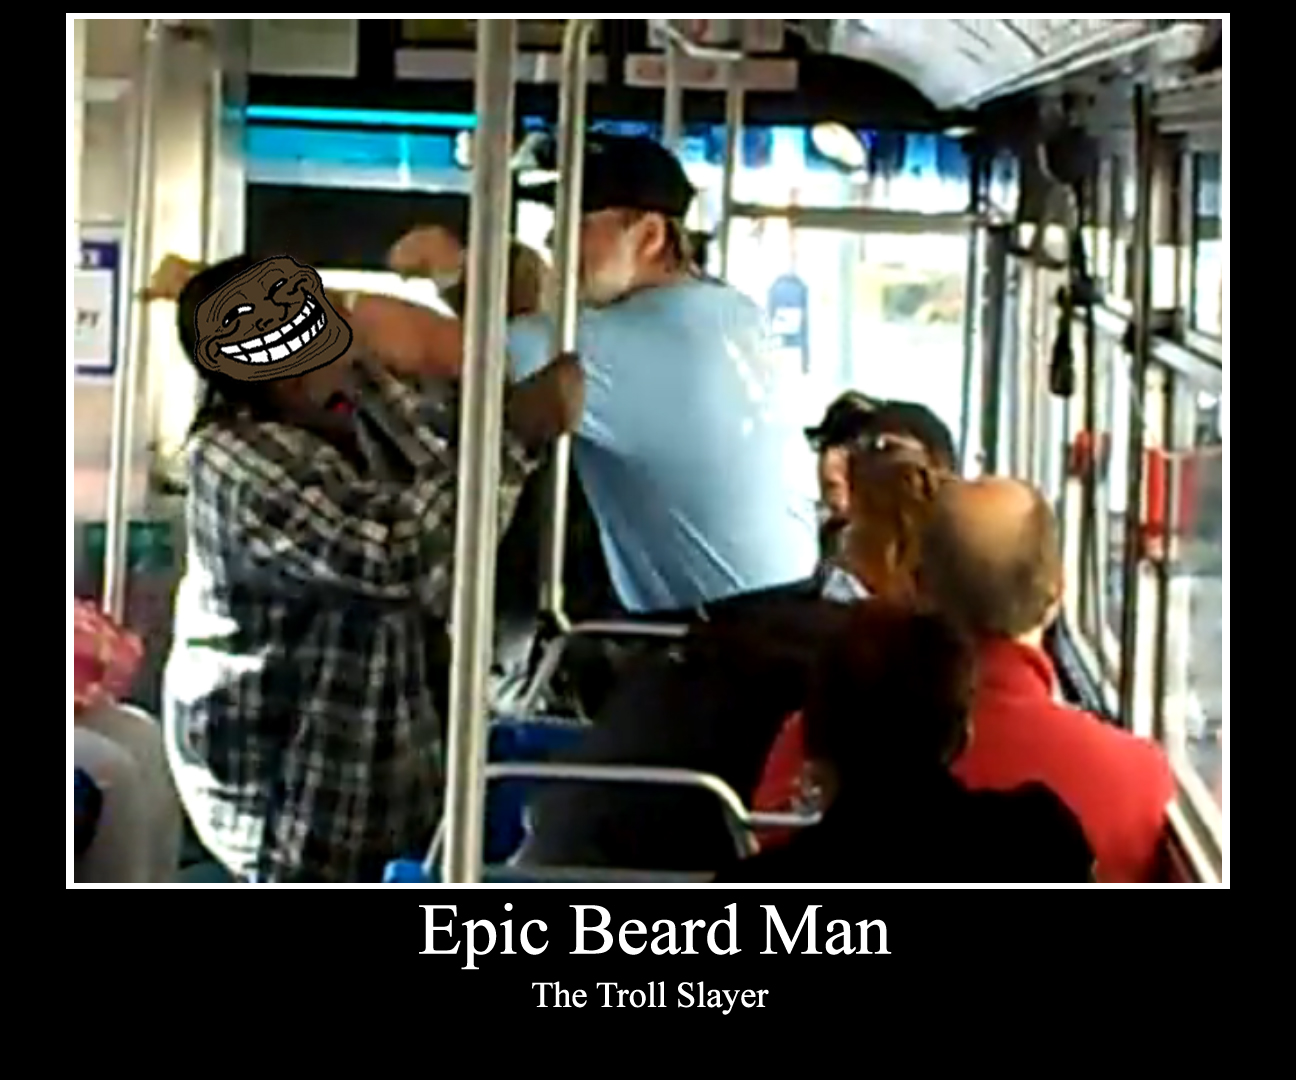 Epic Beard Man the Troll Slayer